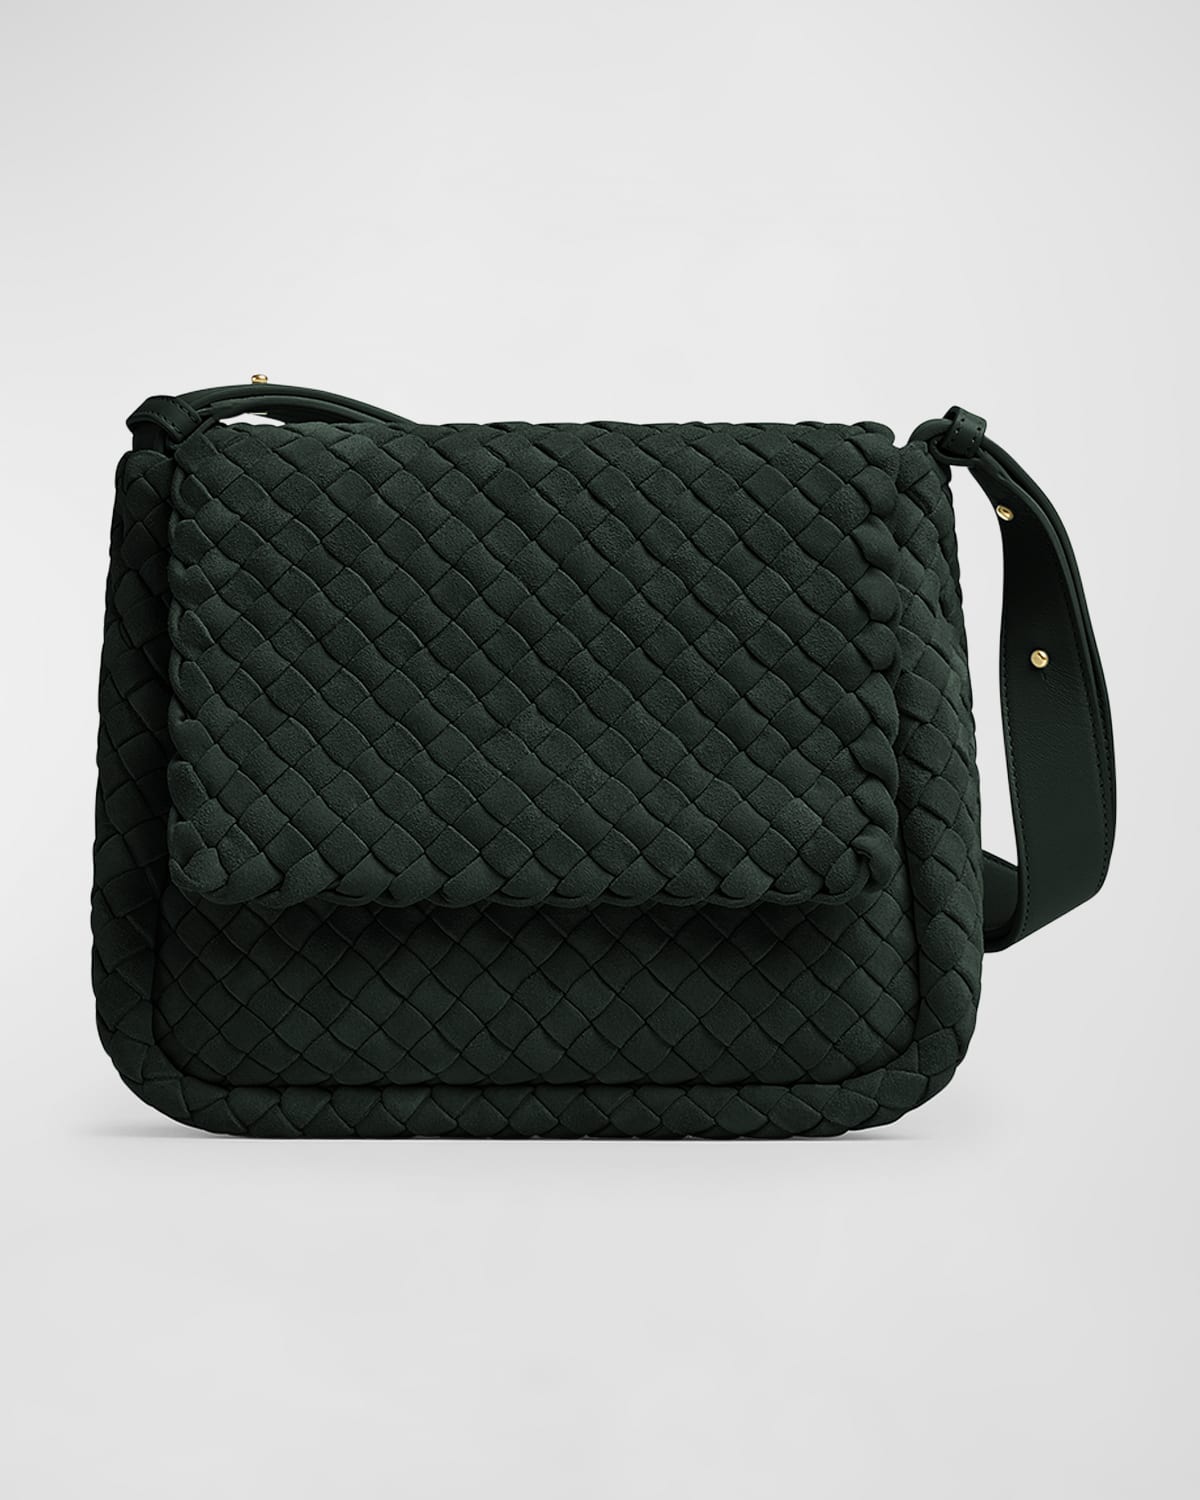 Bottega Veneta Loop Knot Woven Leather Crossbody Bag in Green